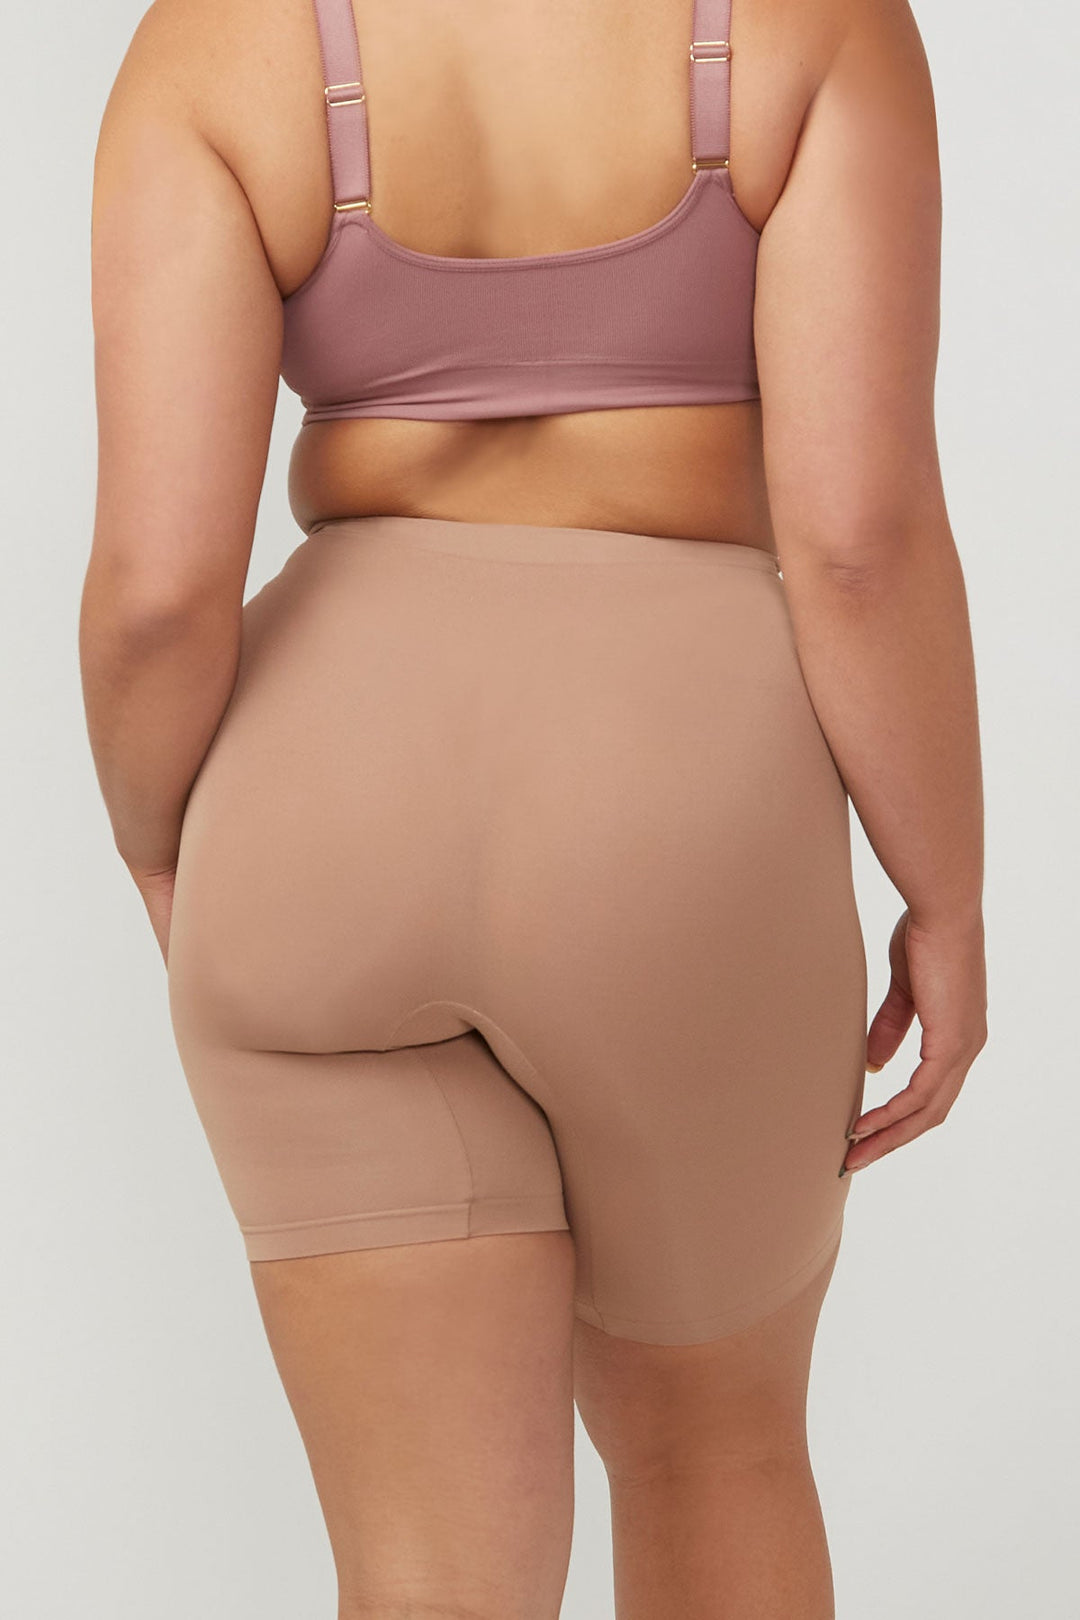 Women's anti-chafing underwear shorts | Bella Bodies UK | Coolfit Everday Anti Chafing Shorts | 2pk | Taupe | Back